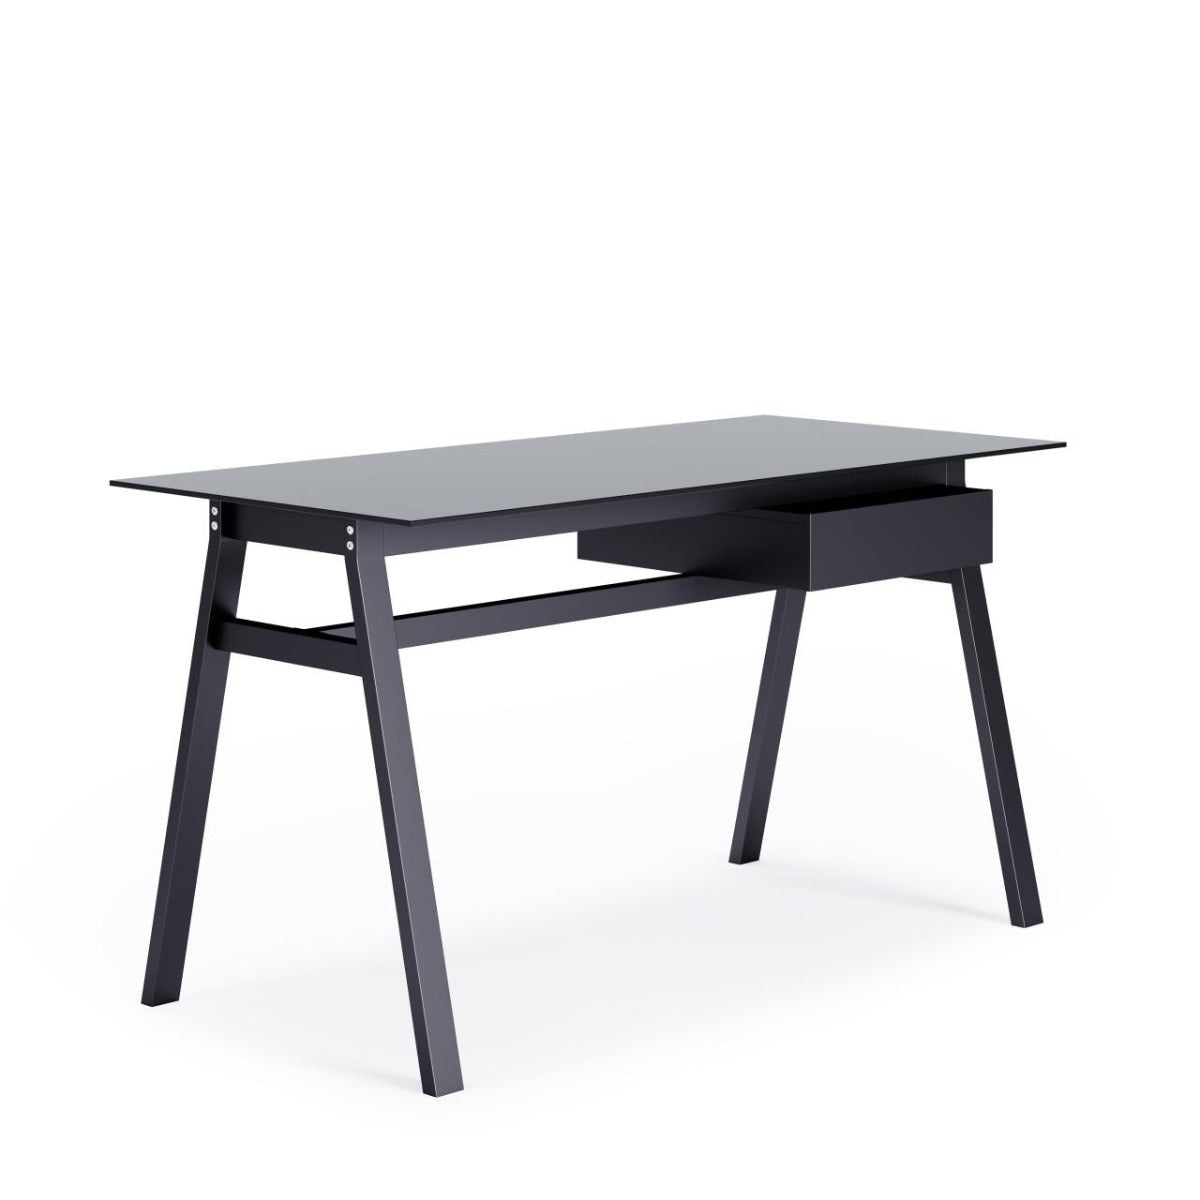 Richmond Glass Home Office Desk - Black, Grey or White Option